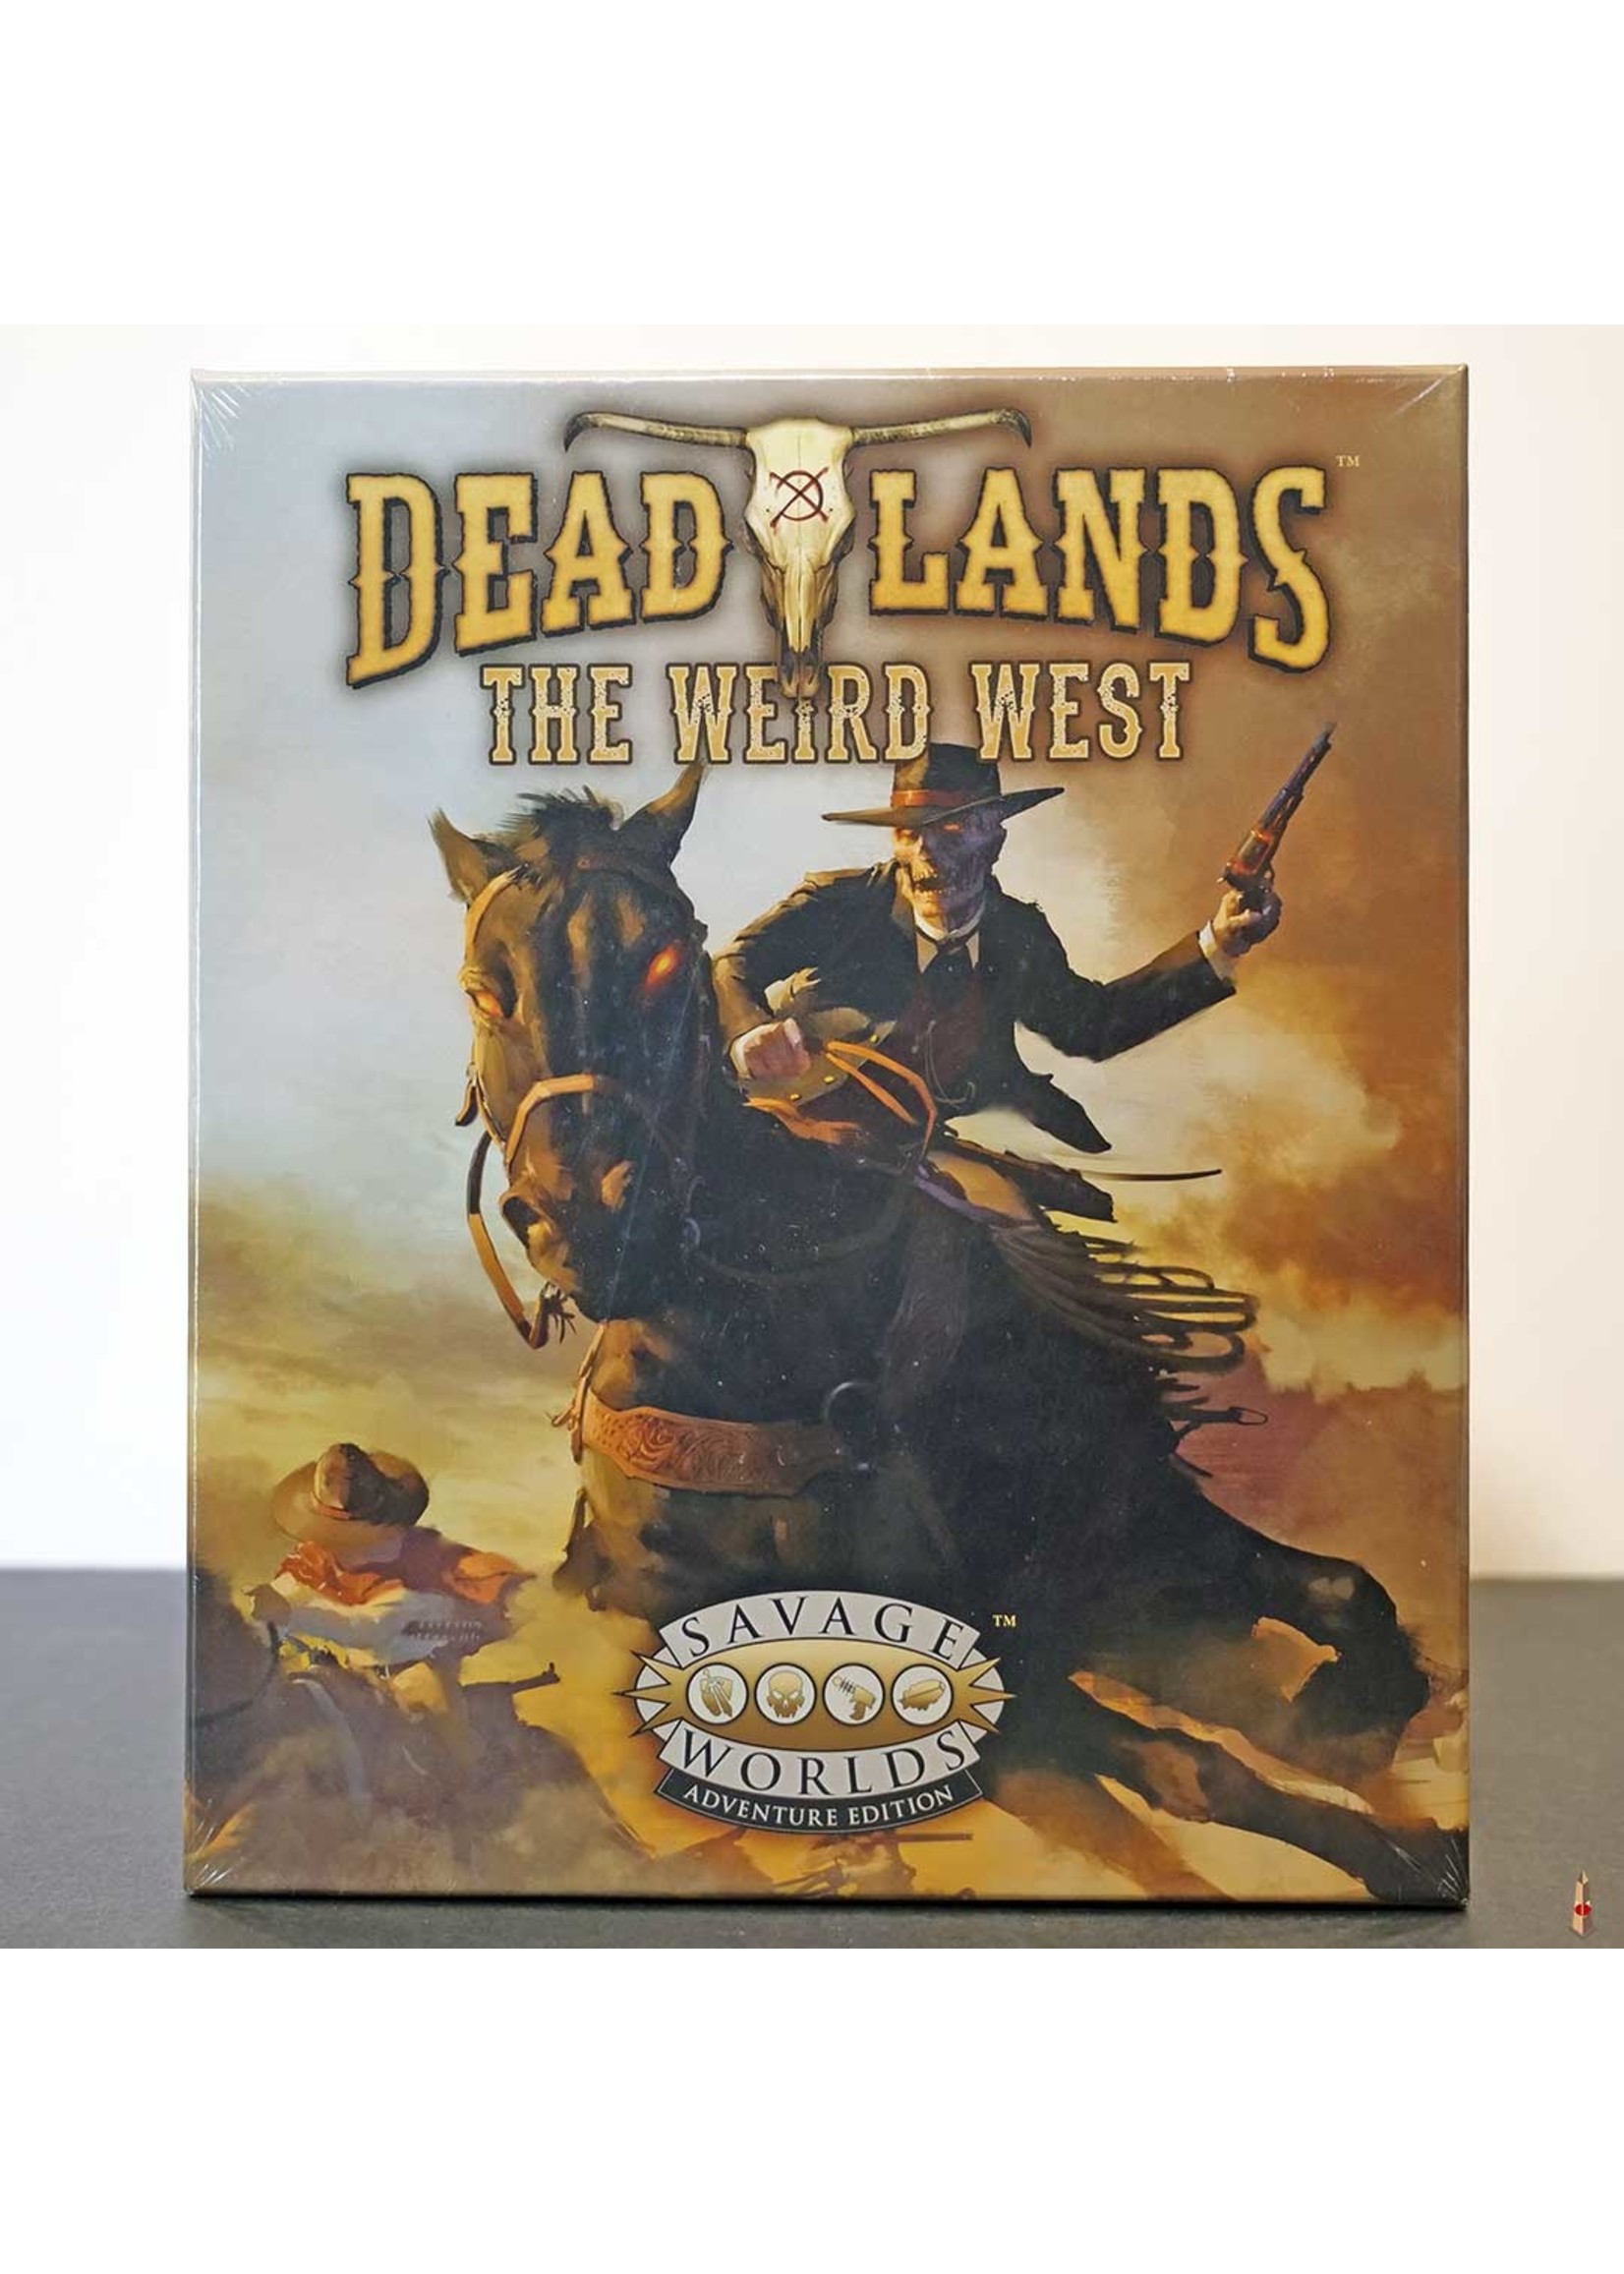 Savage Worlds RPG: Deadlands - The Weird West Boxed Set